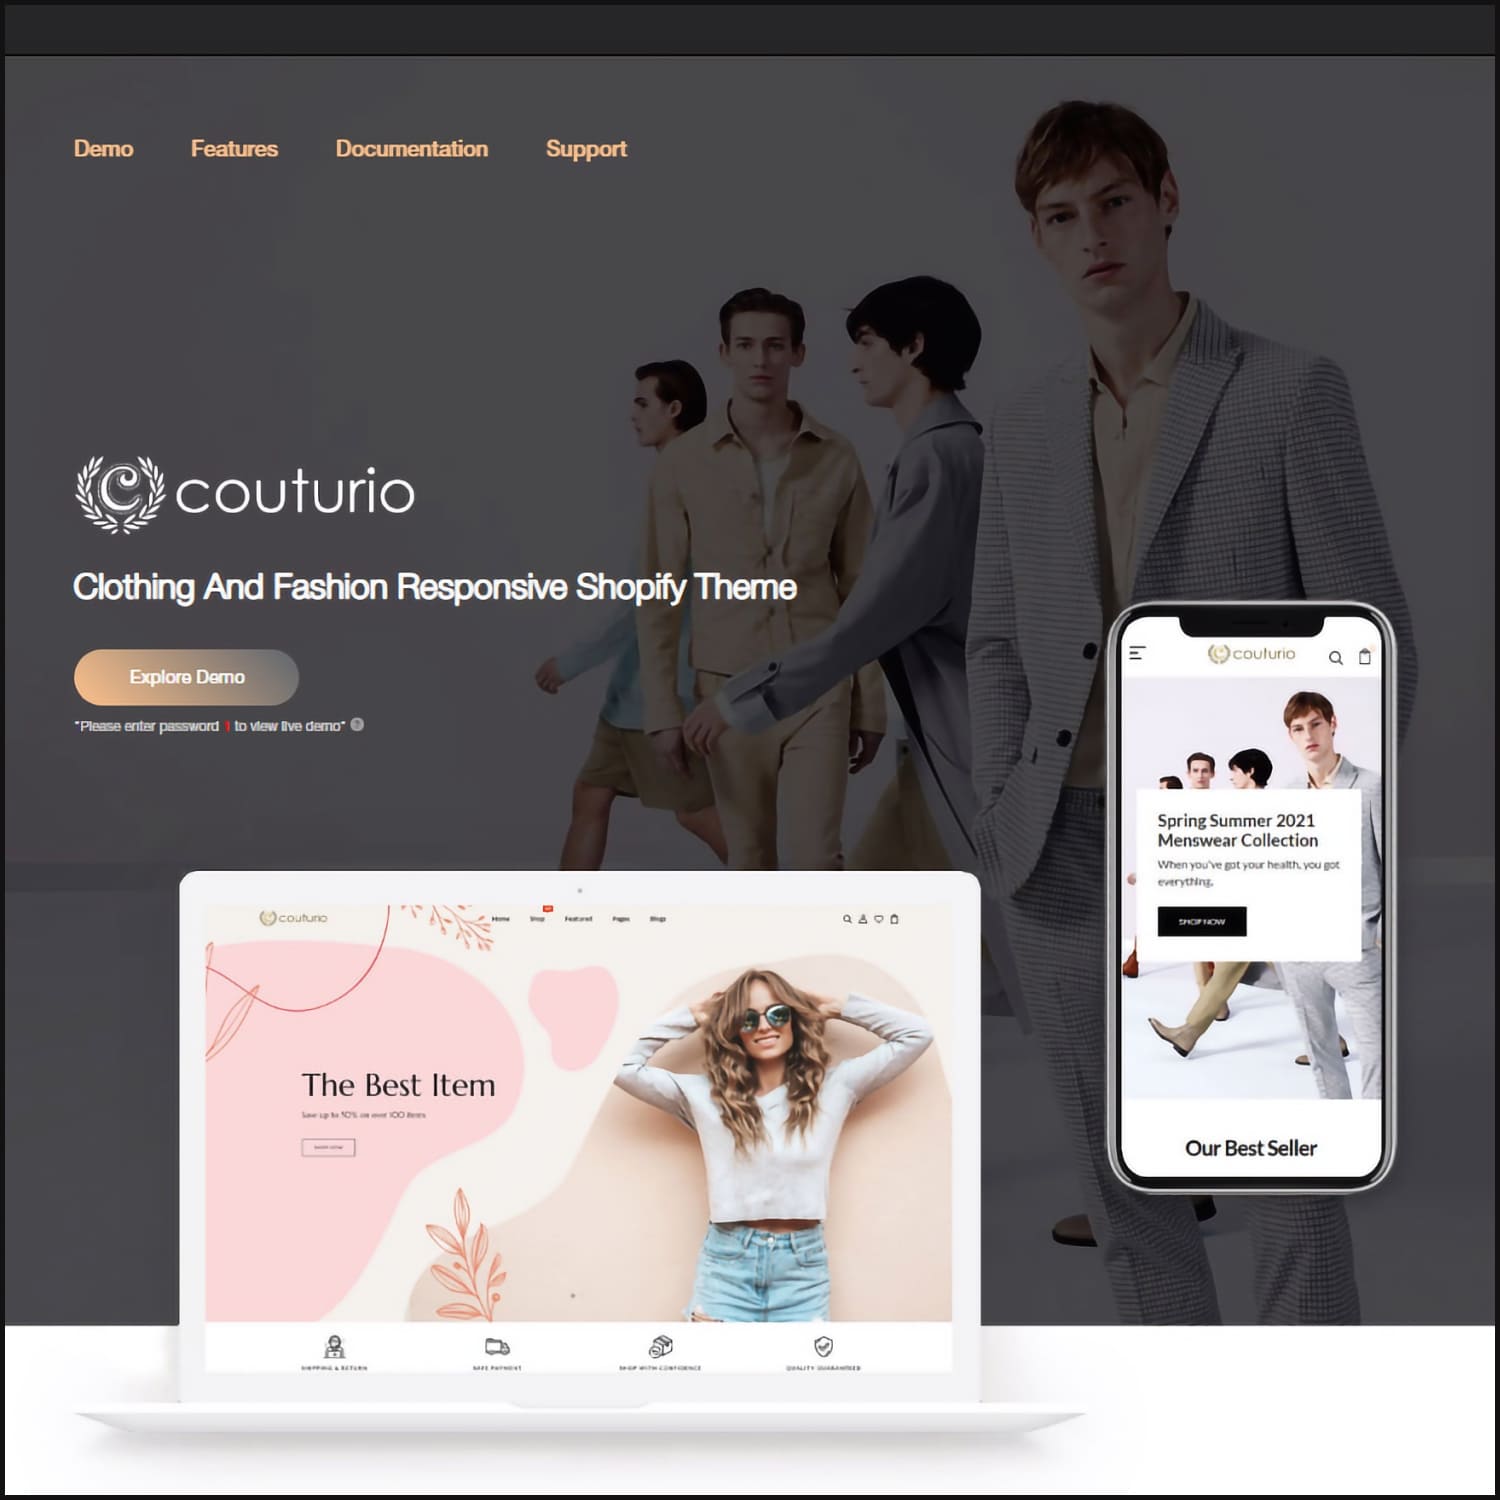 Explore demo of Couturio clothing and fashion responsive shopify theme.